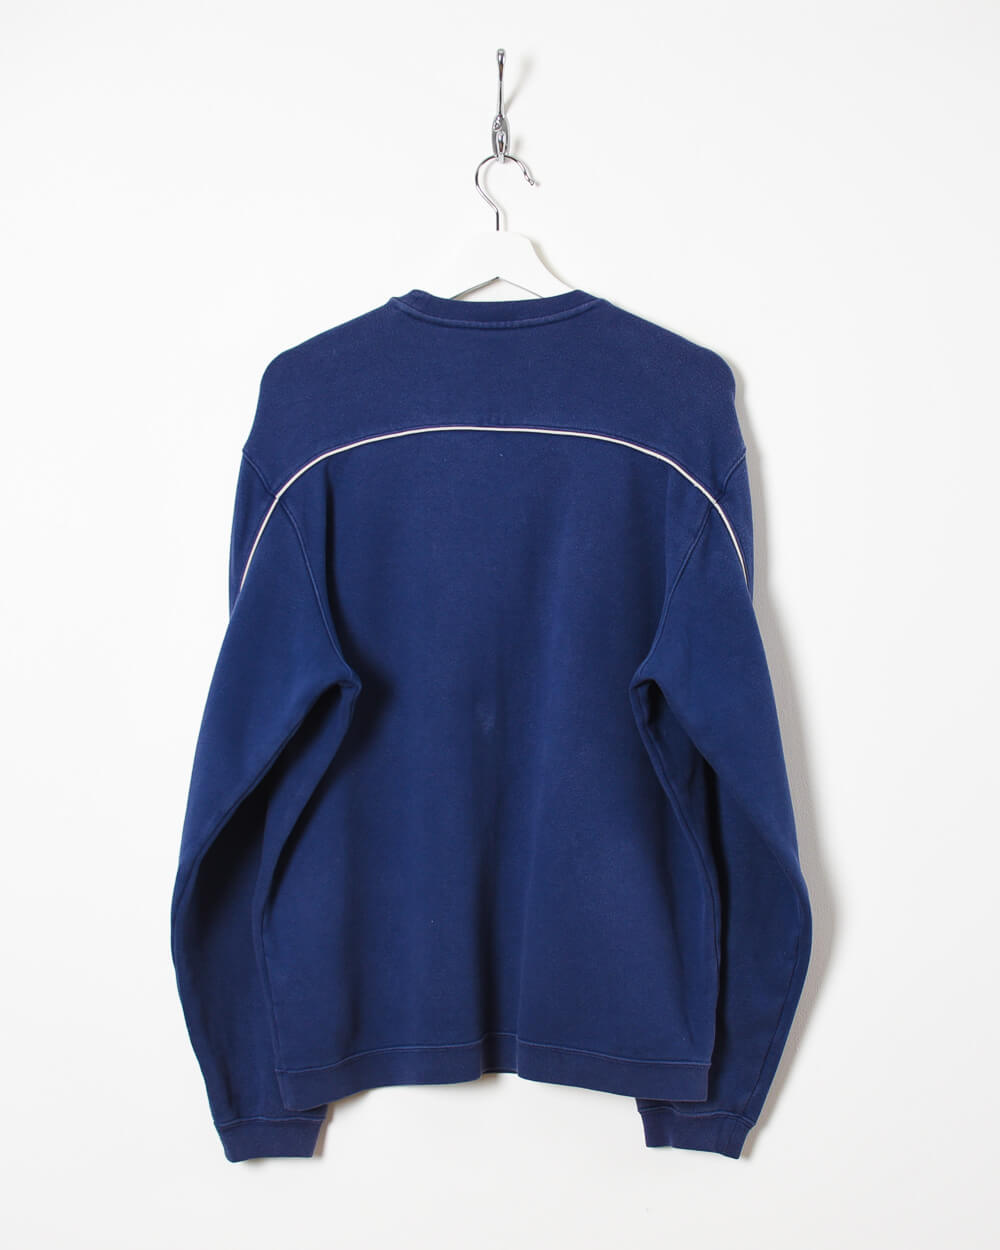 Nike Golf Sweatshirt - Medium - Domno Vintage 90s, 80s, 00s Retro and Vintage Clothing 